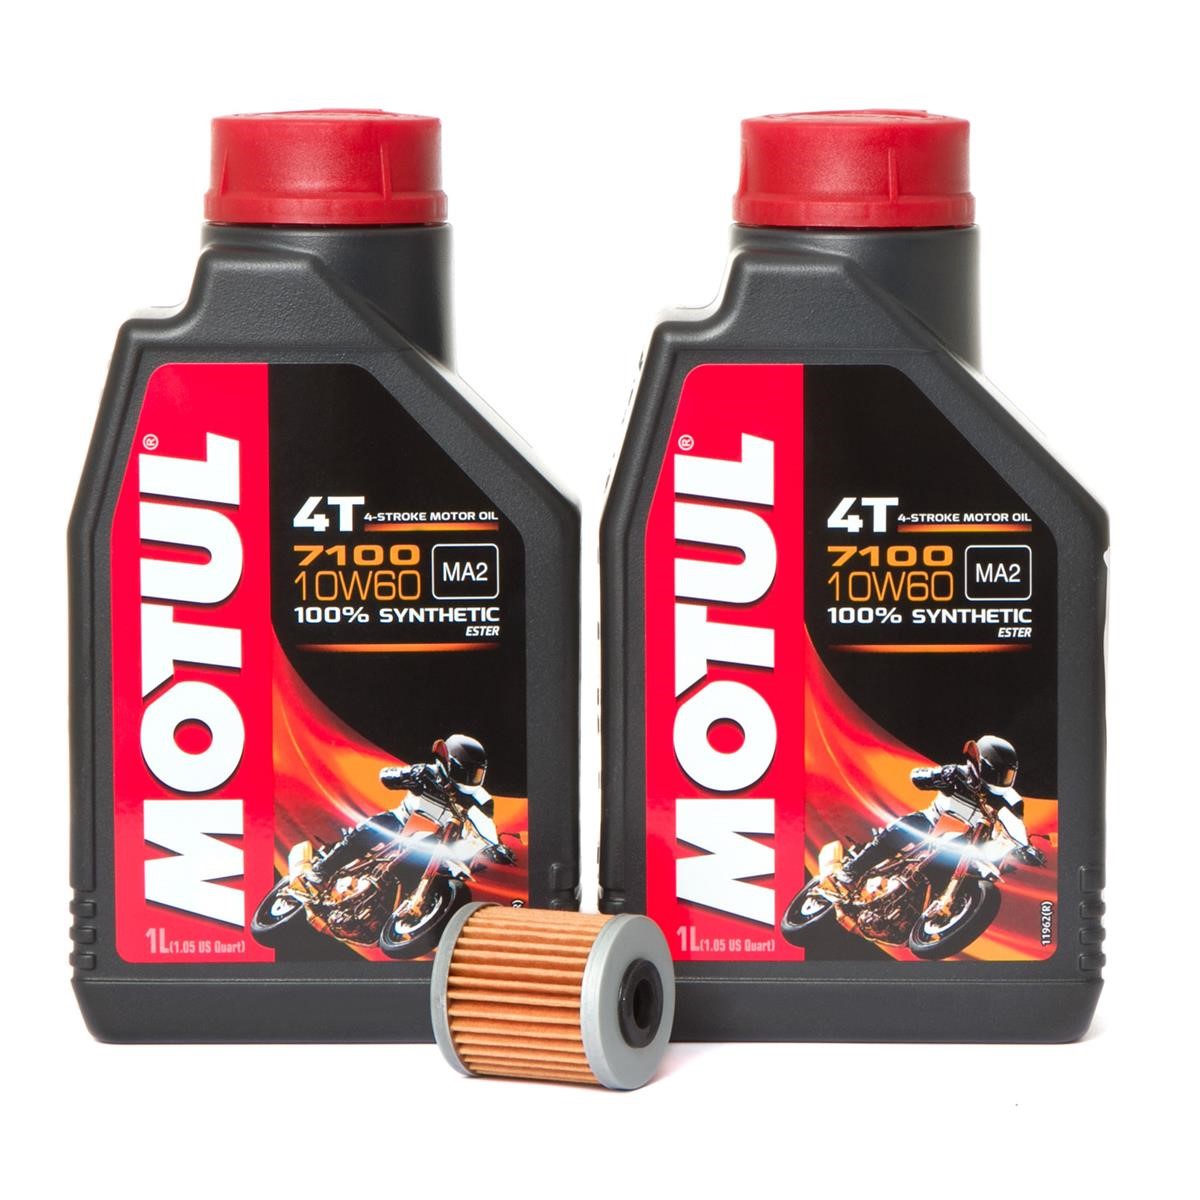 Motul Kit Olio Motore 10W60 inkl. Ölfilter for GasGas, Honda, Kawasaki